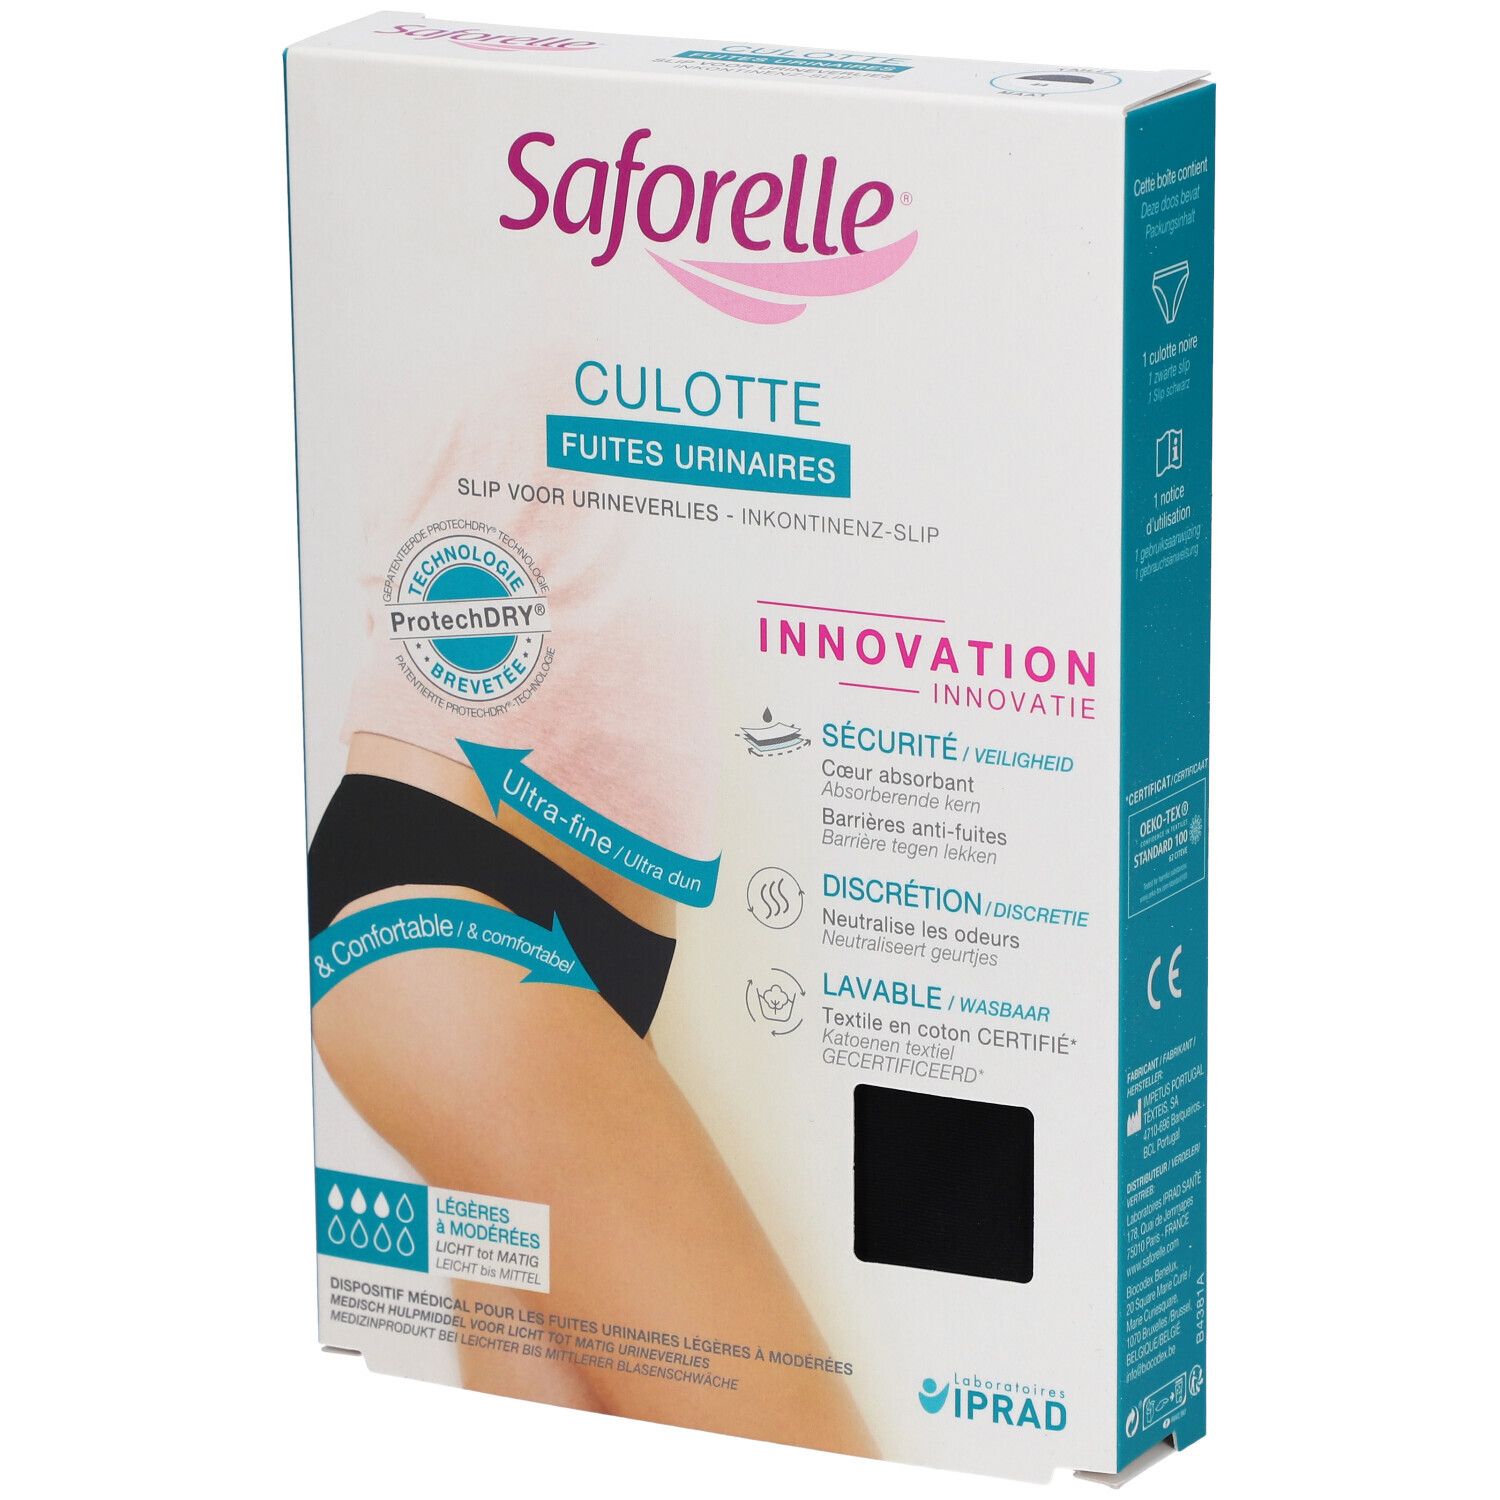 Saforelle® Culotte Fuites Urinaires Taille 44